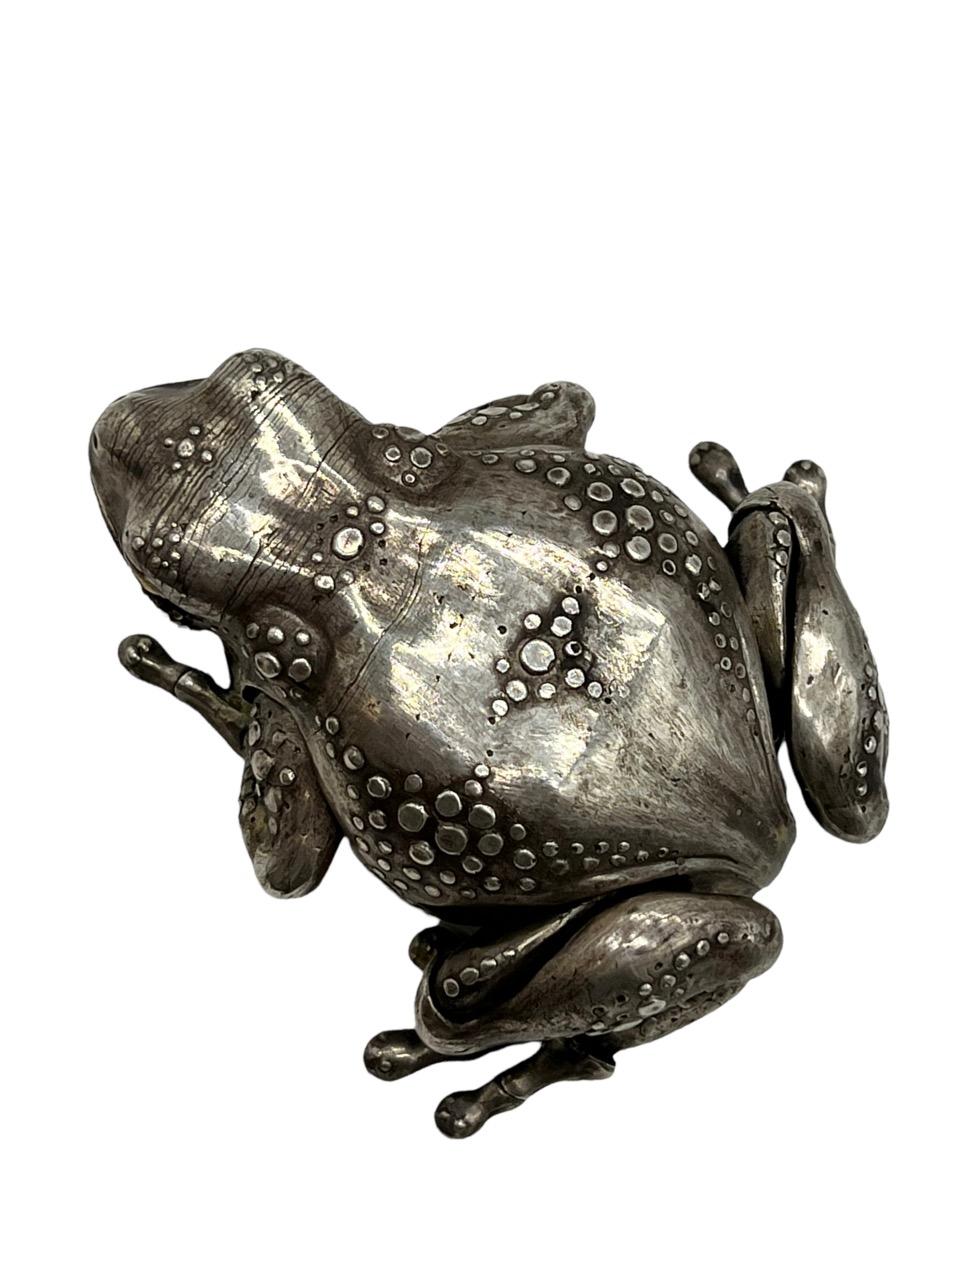 Oleg Konstantinov Fully Articulated Frog Made of Sterling Silver For Sale 6